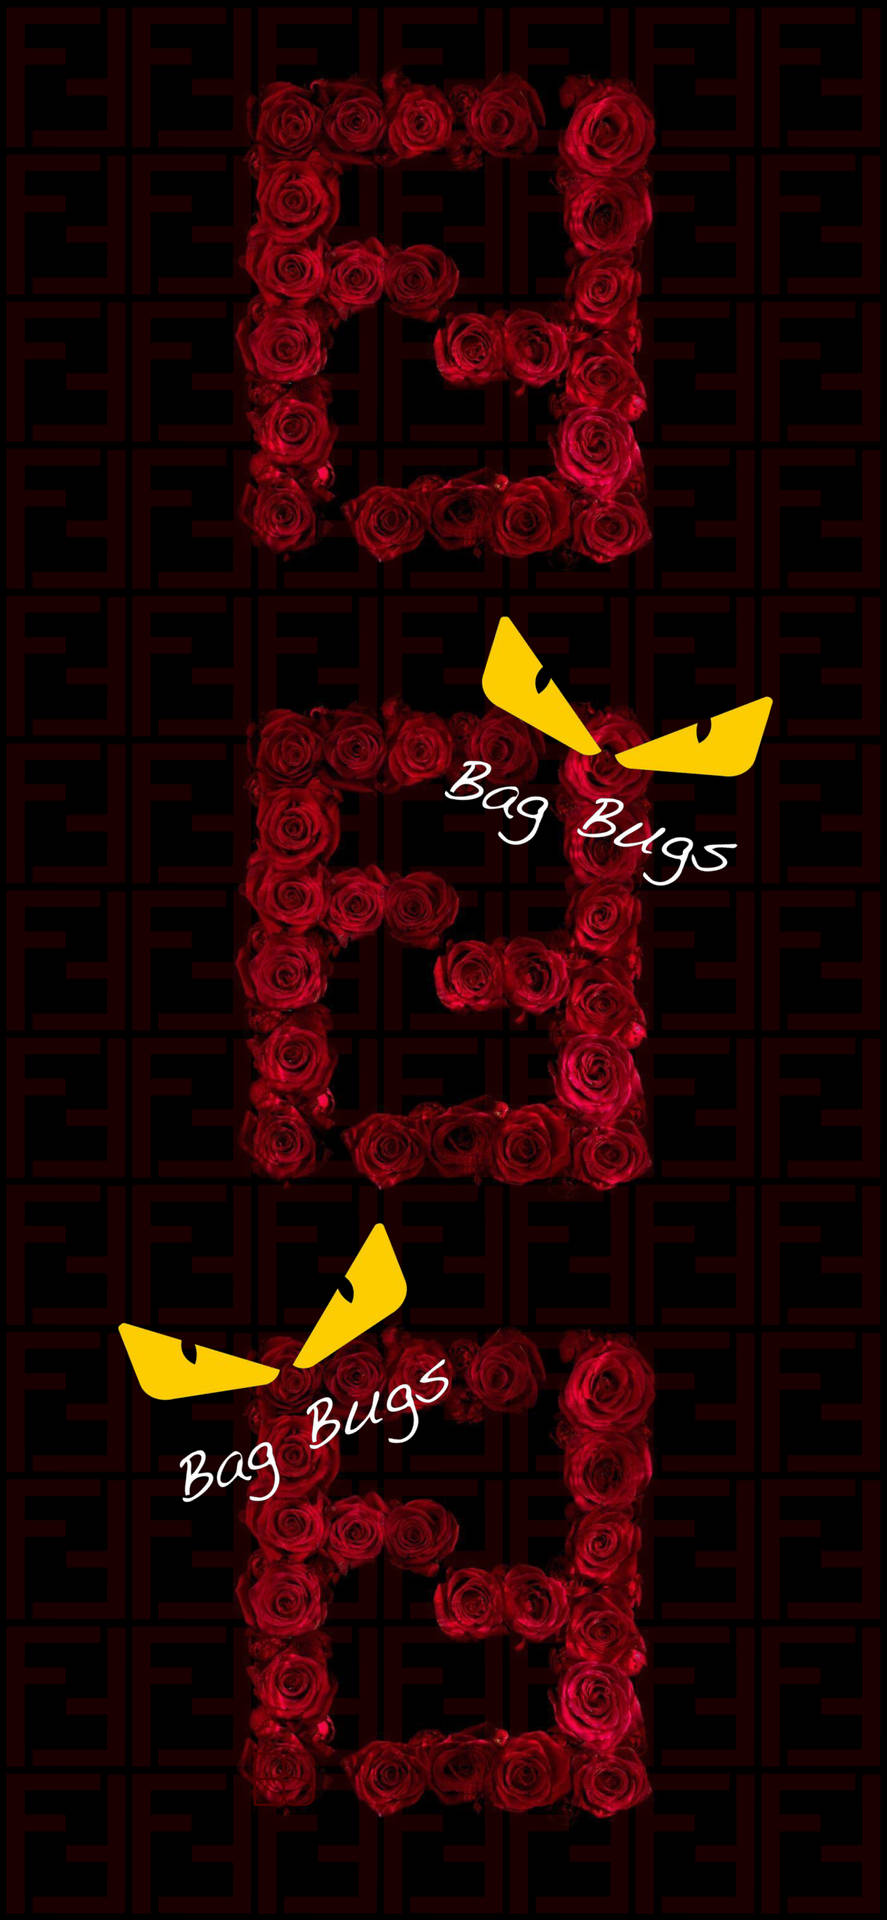 Fendi Bug Bags Background